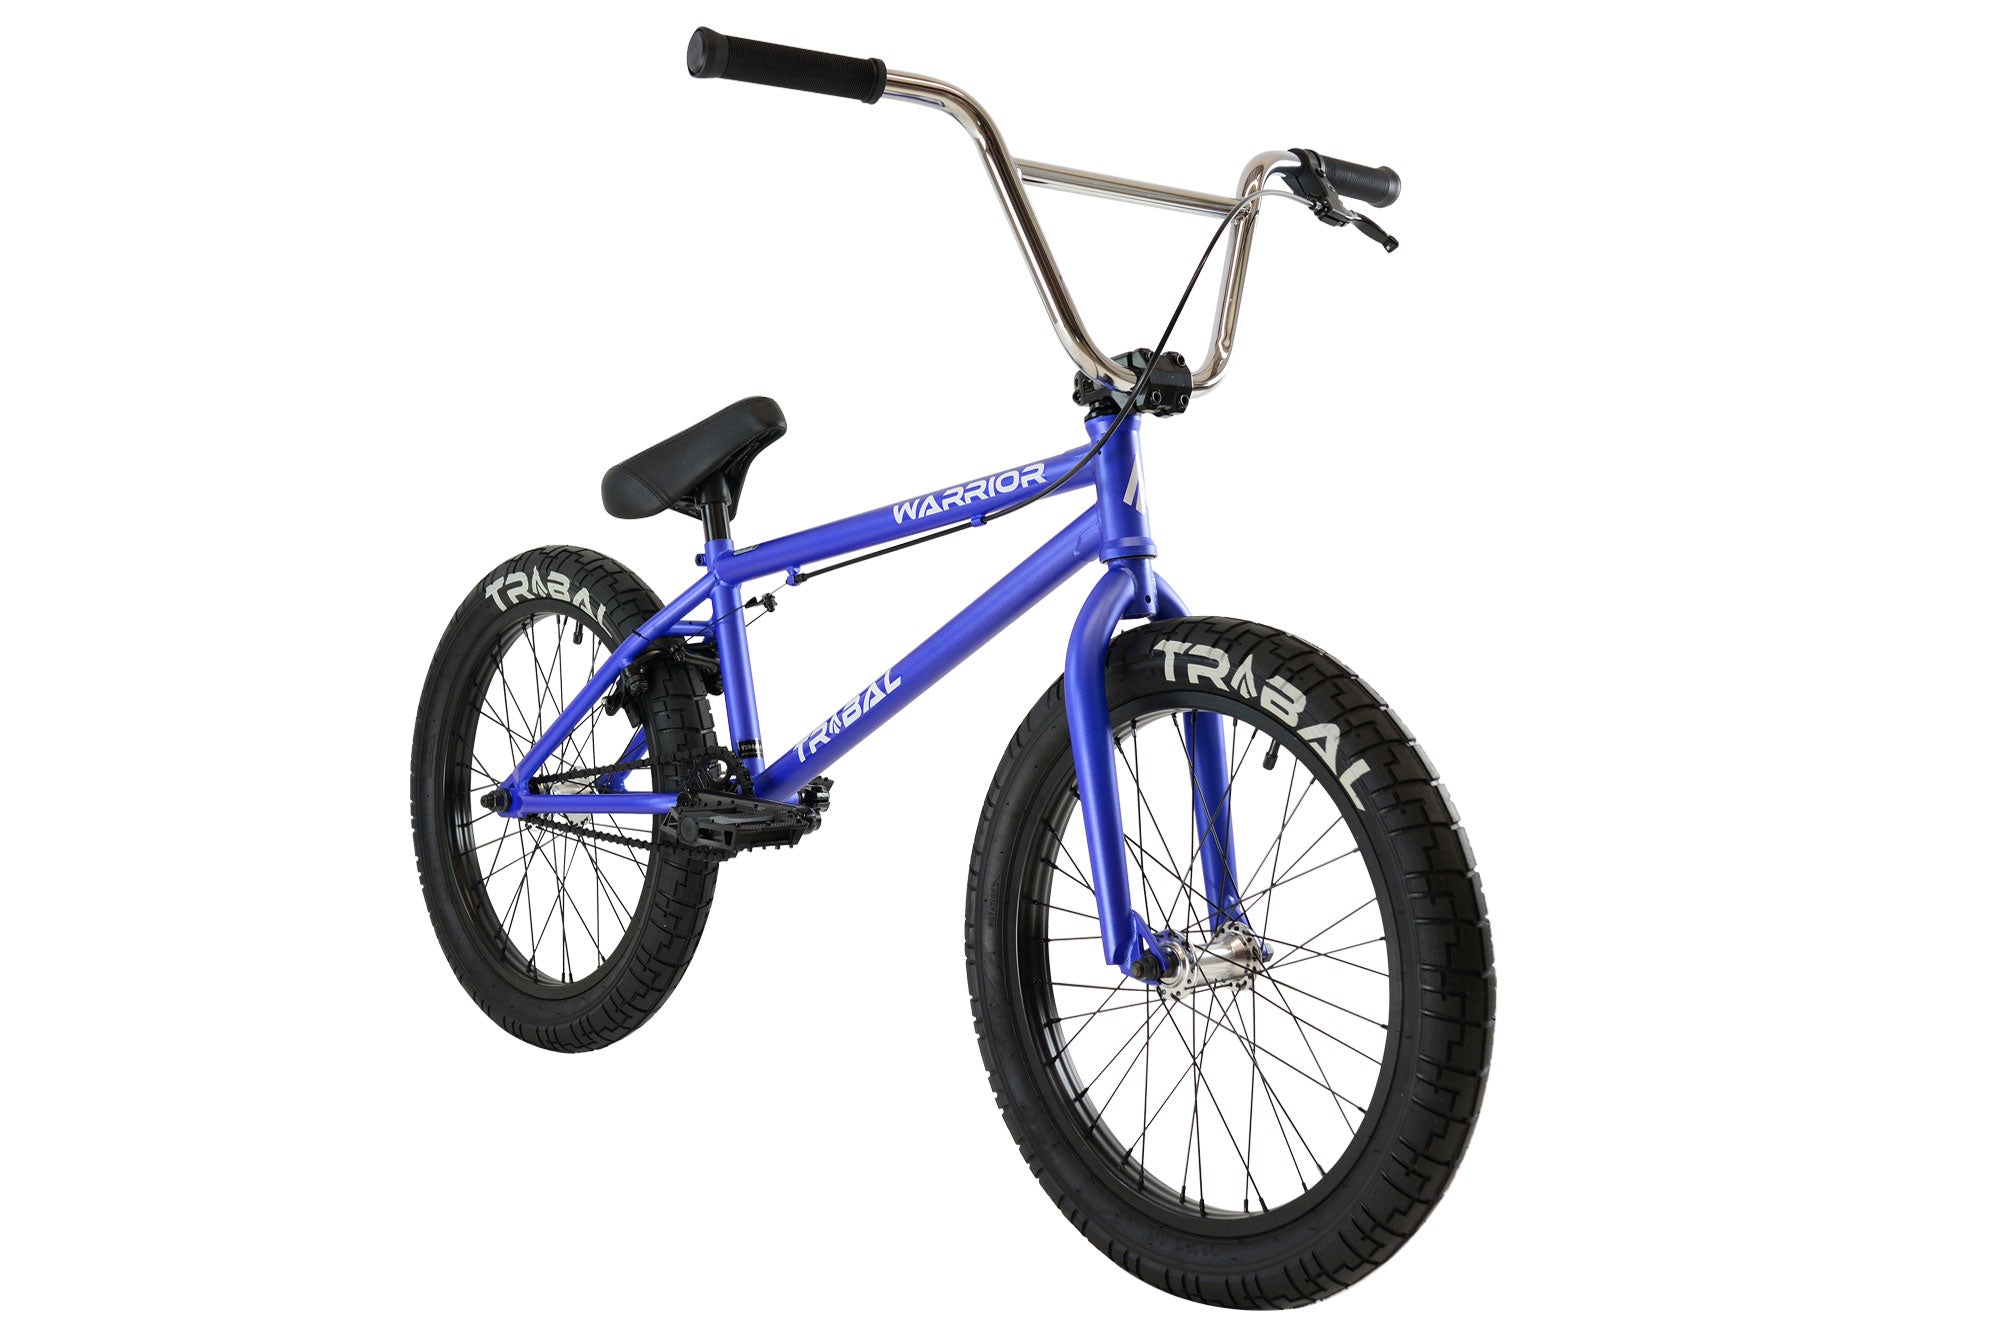 Tribal Warrior BMX Bike - Metalic Matte Blue